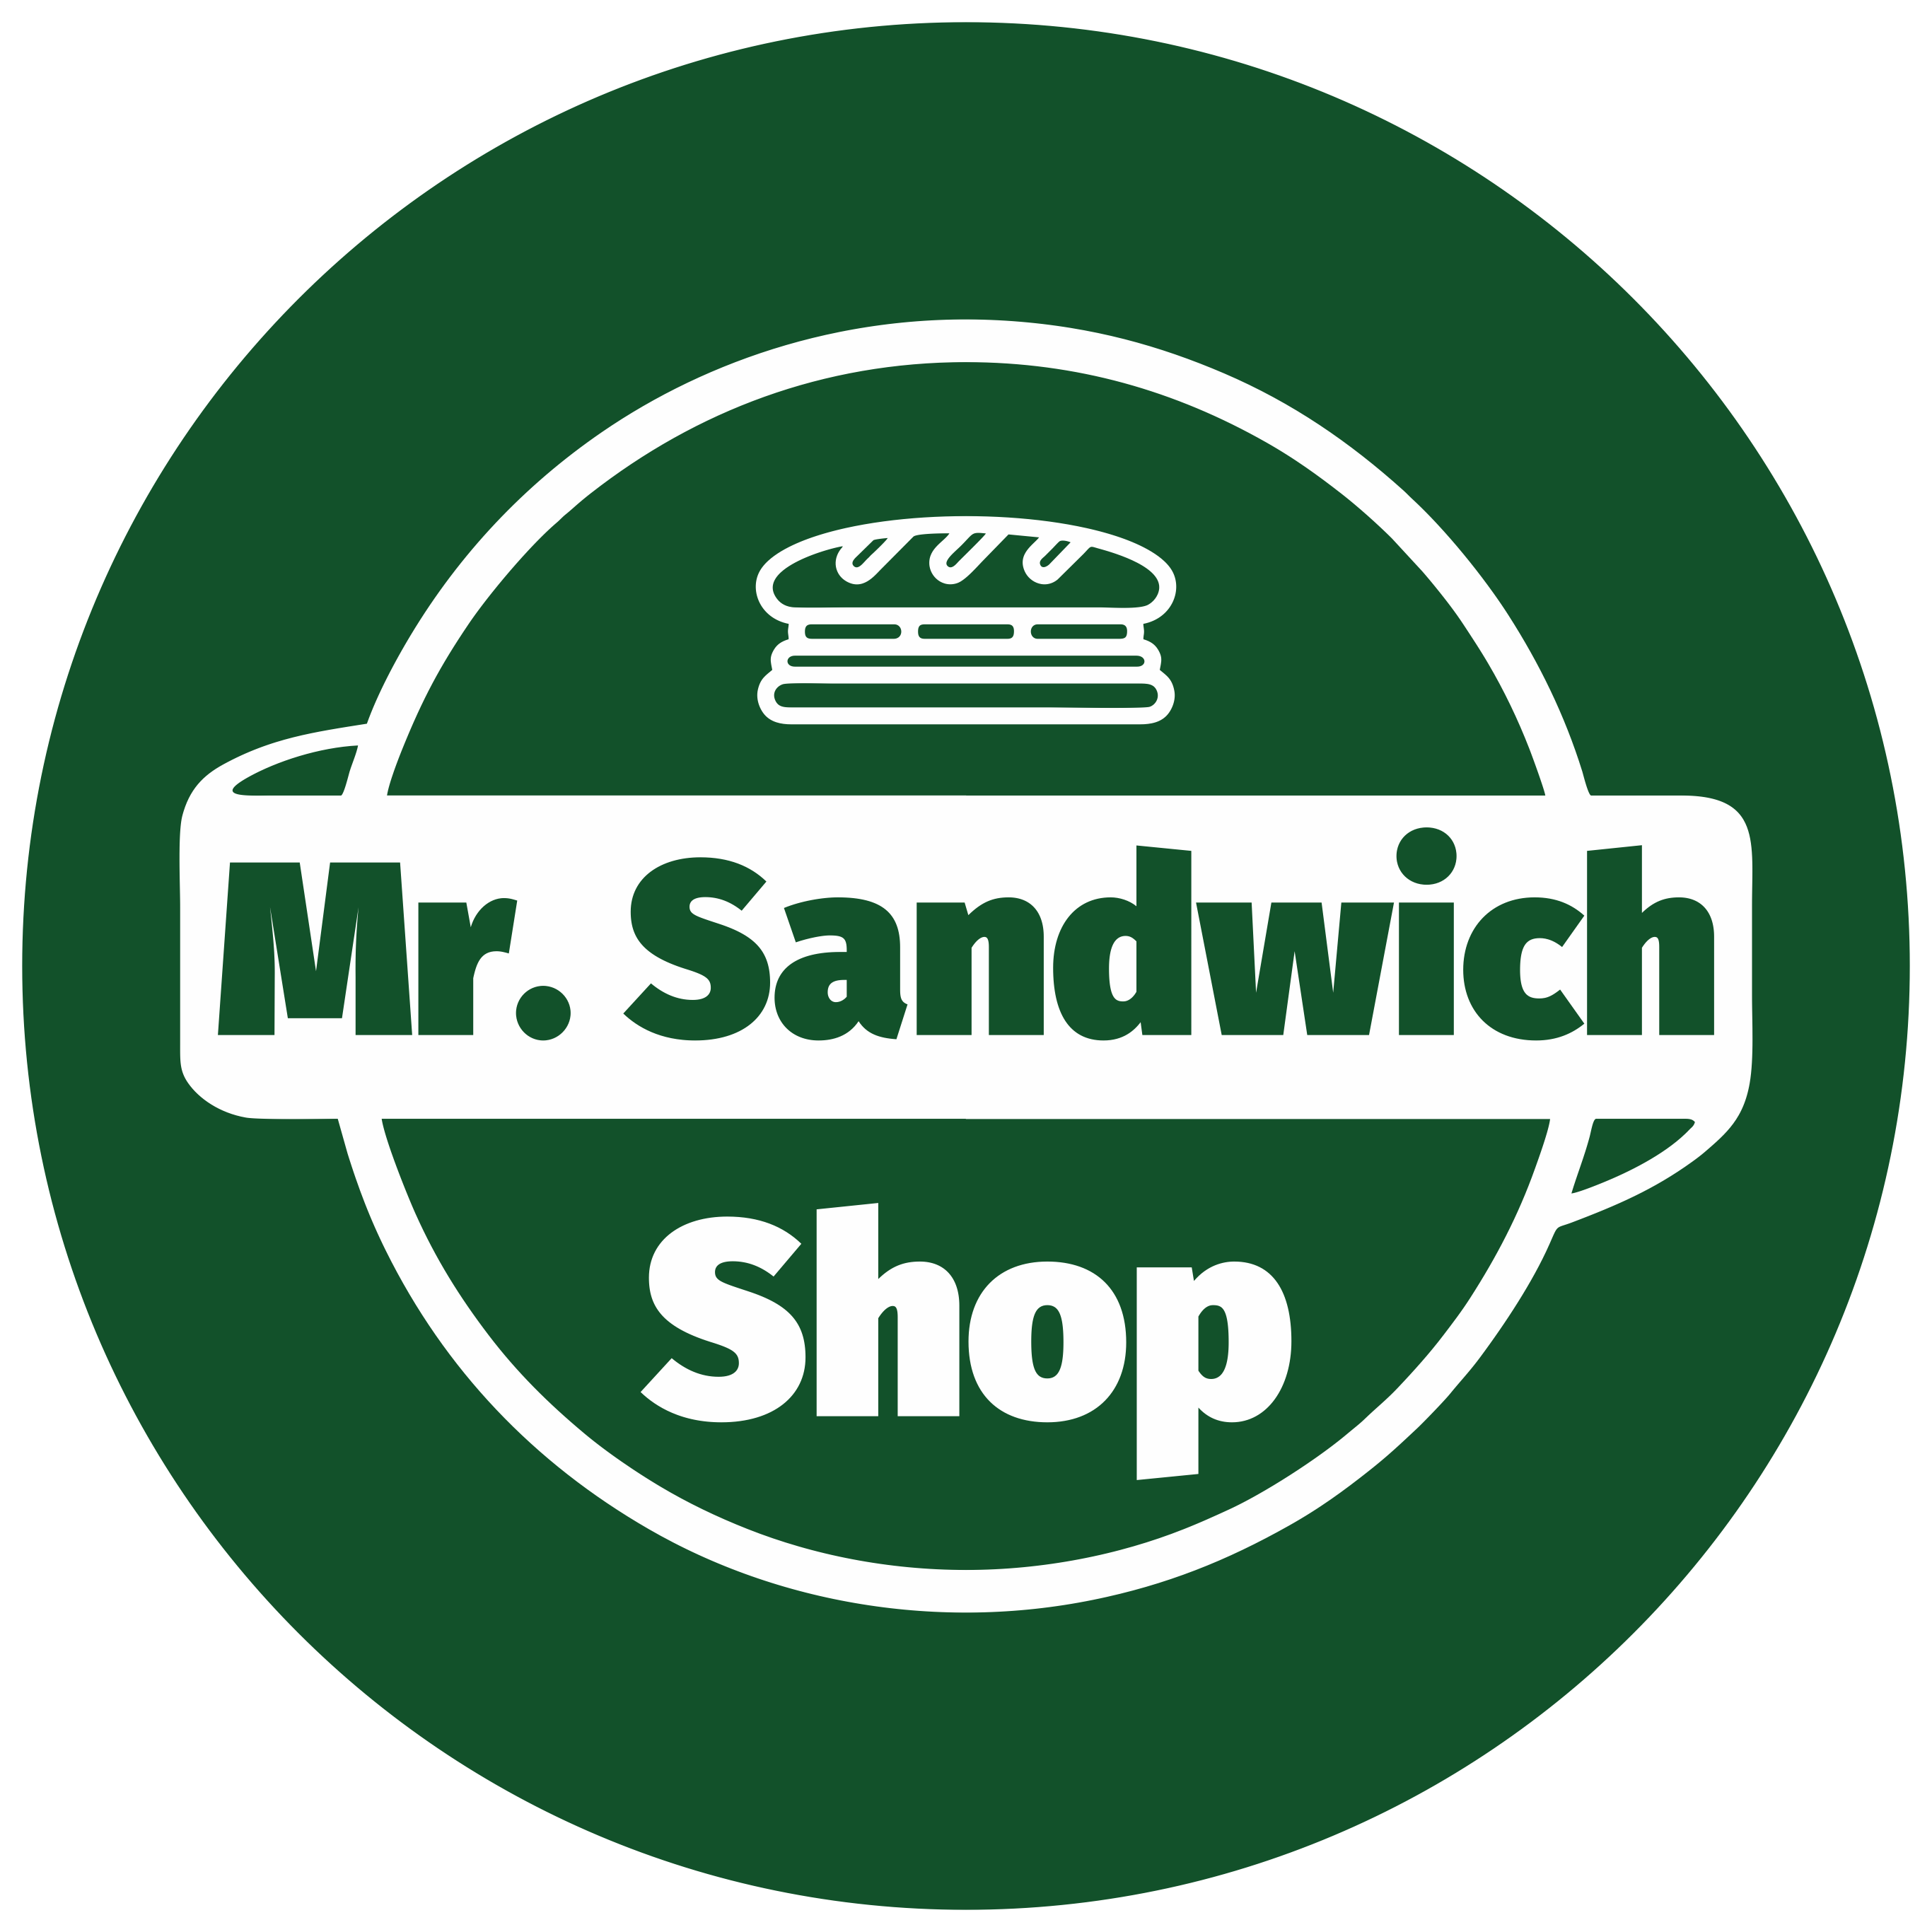 Mister Sandwich